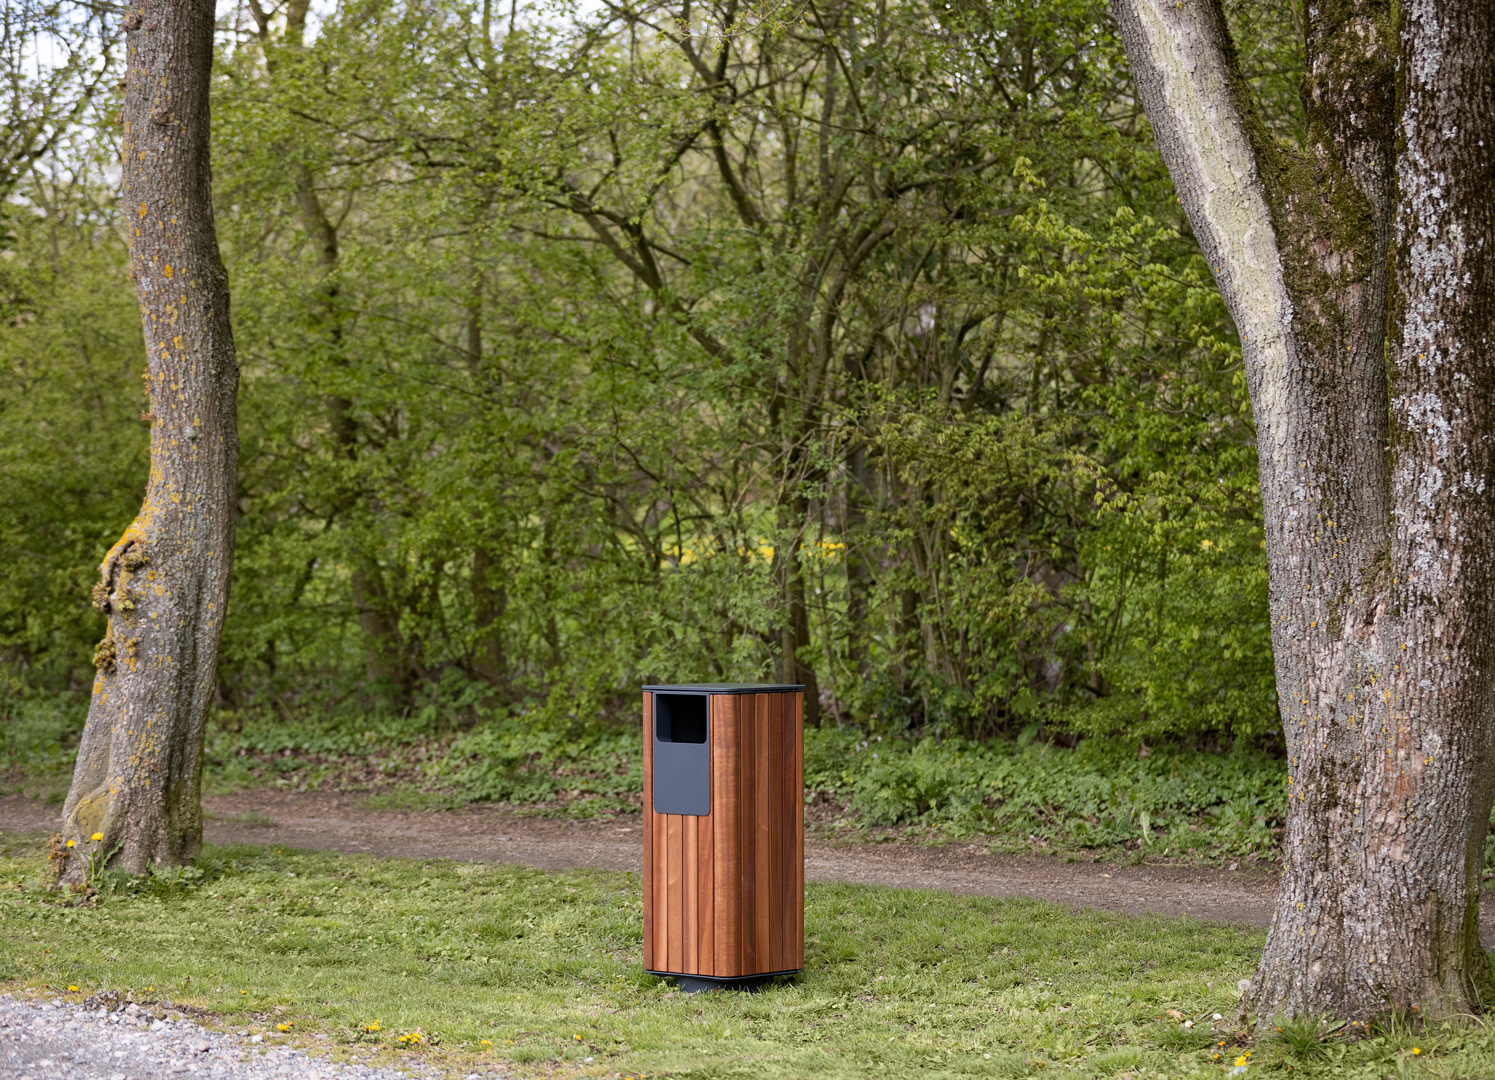 Wood clad litter bin for public spaces